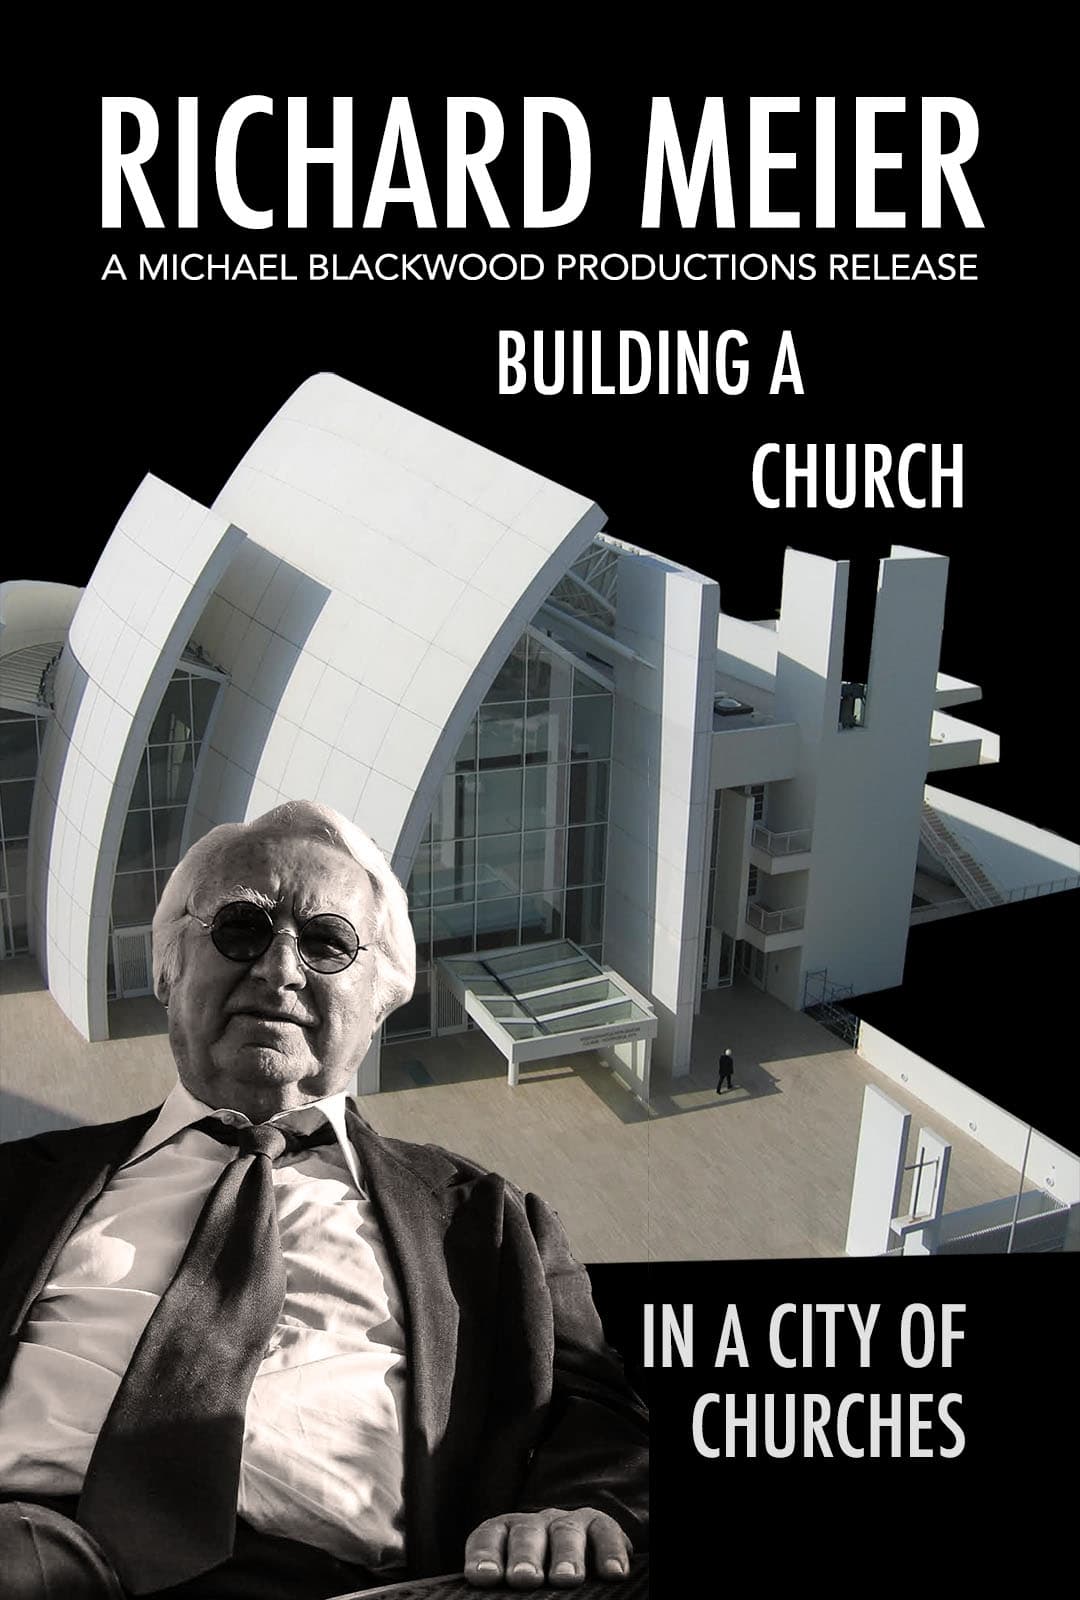 Richard Meier in Rome Building a Church in the City of Churches